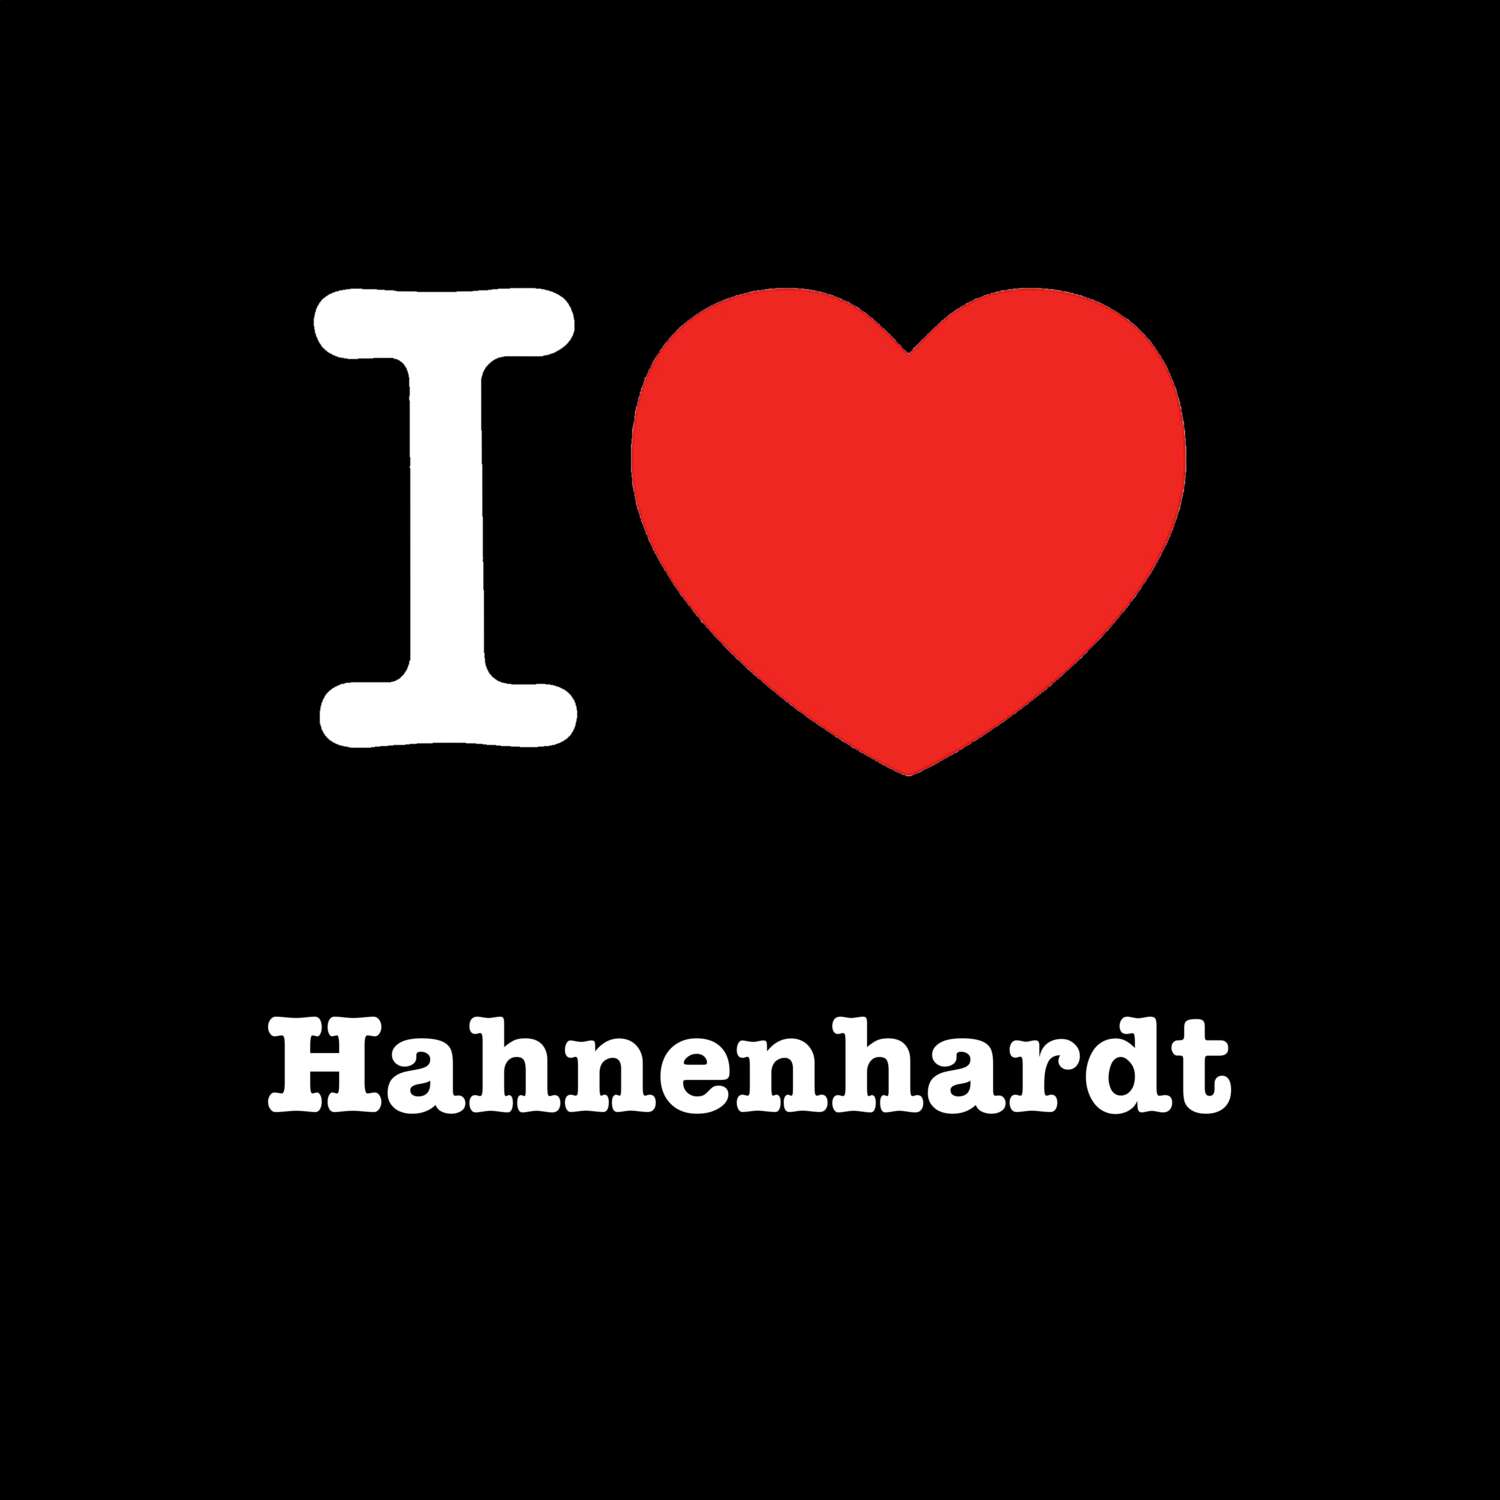 Hahnenhardt T-Shirt »I love«